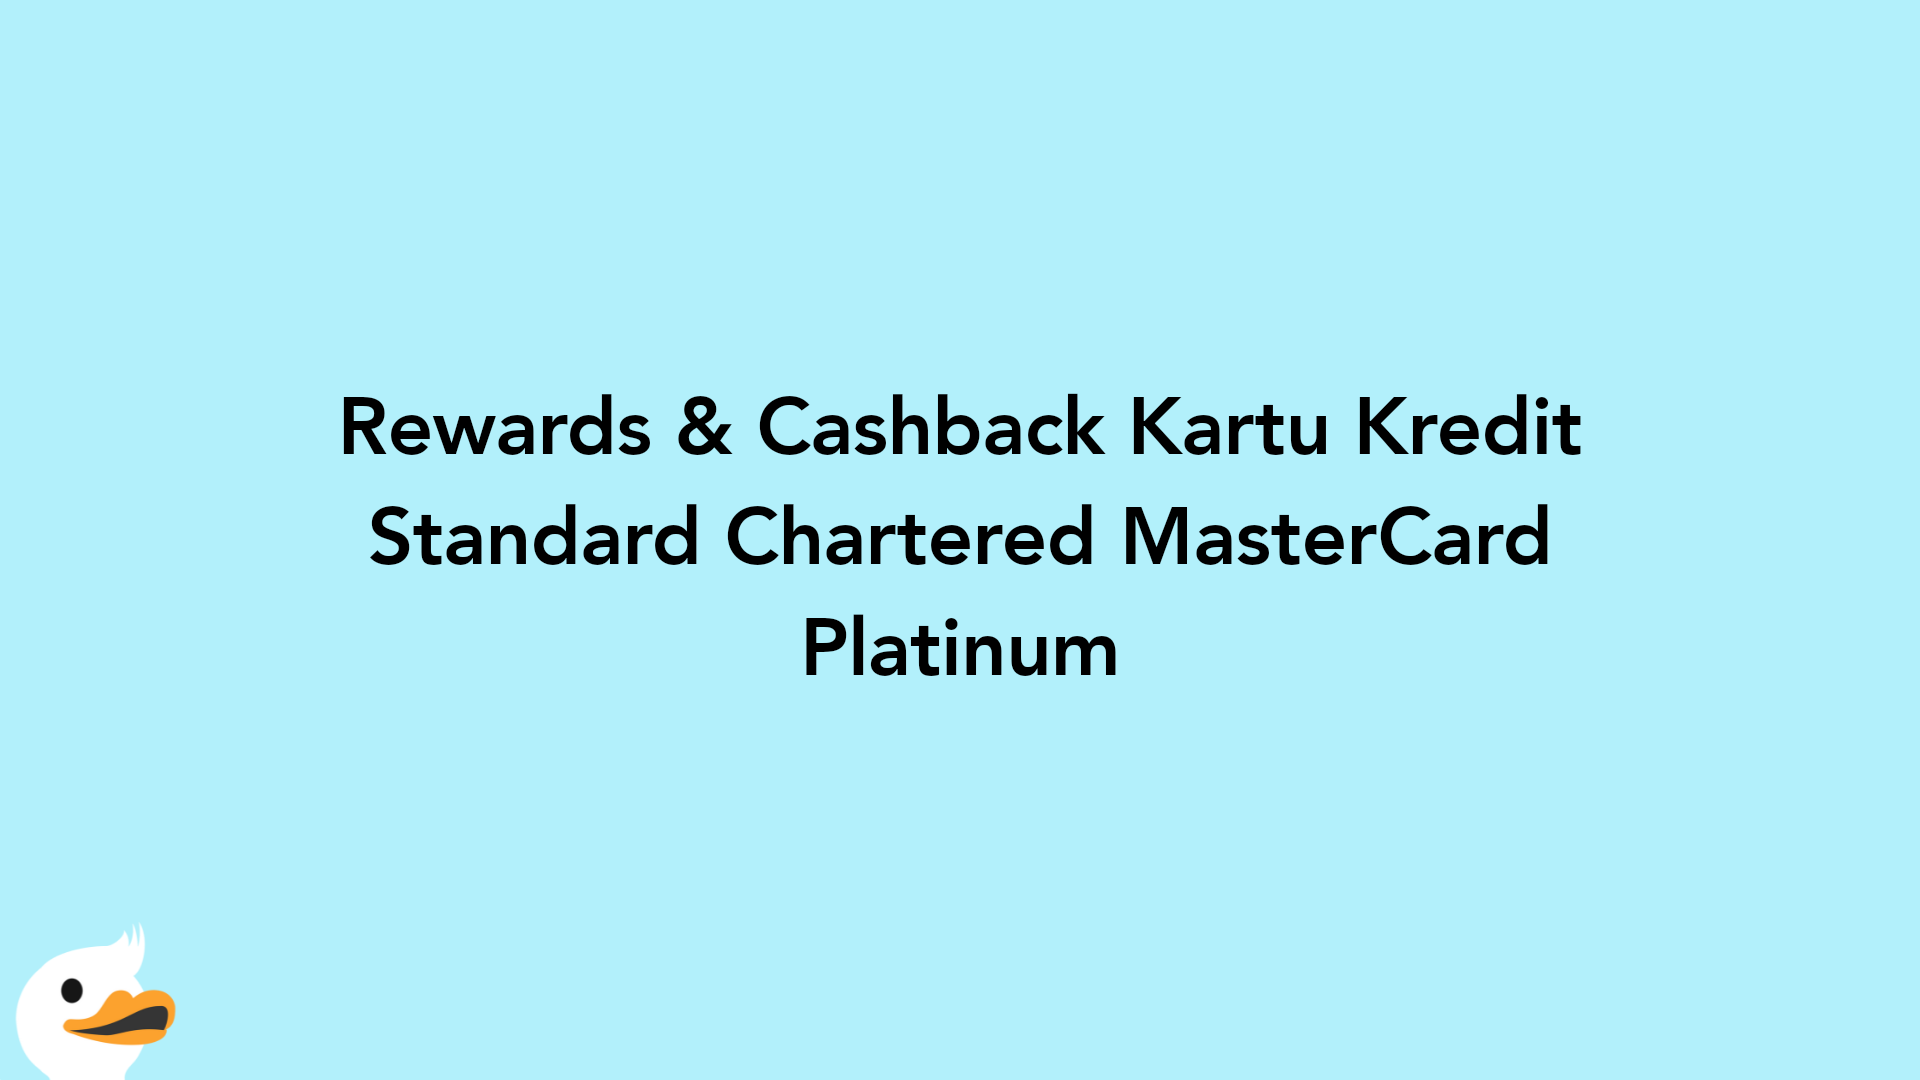 Rewards & Cashback Kartu Kredit Standard Chartered MasterCard Platinum